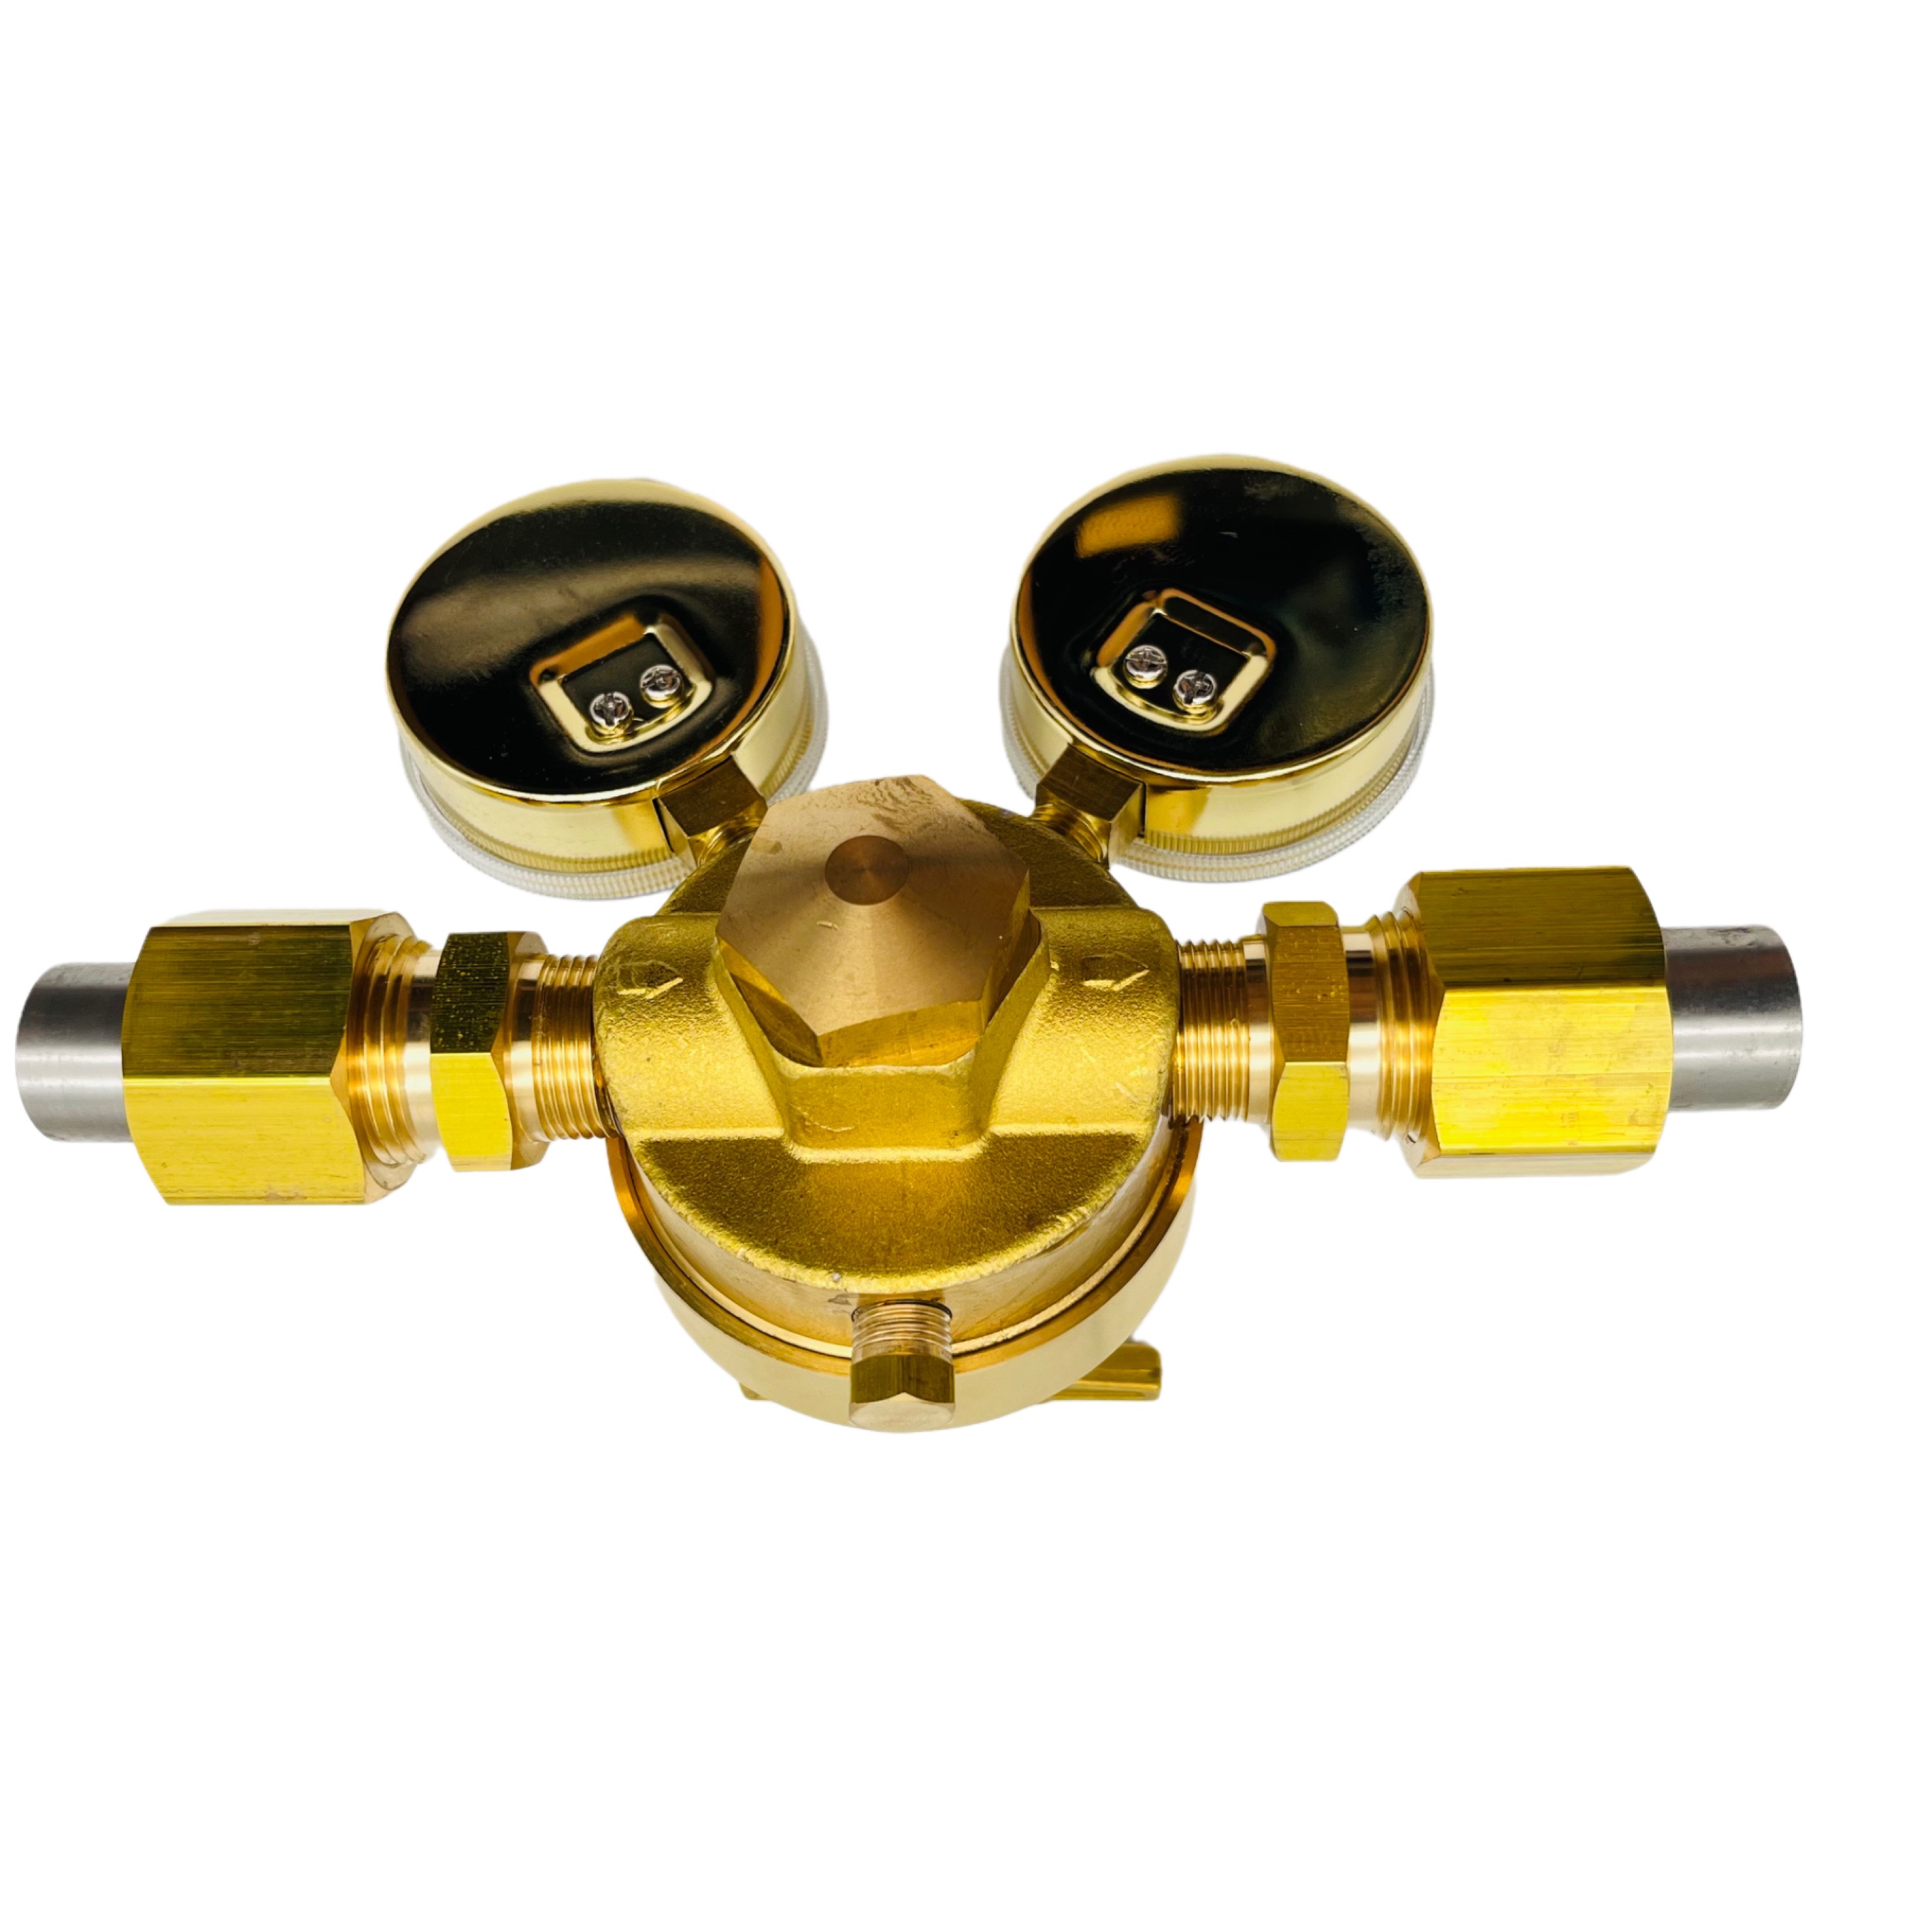 YQJ-12D Pressure Reducer Oxygen Brass Welding Regulator with Gauge